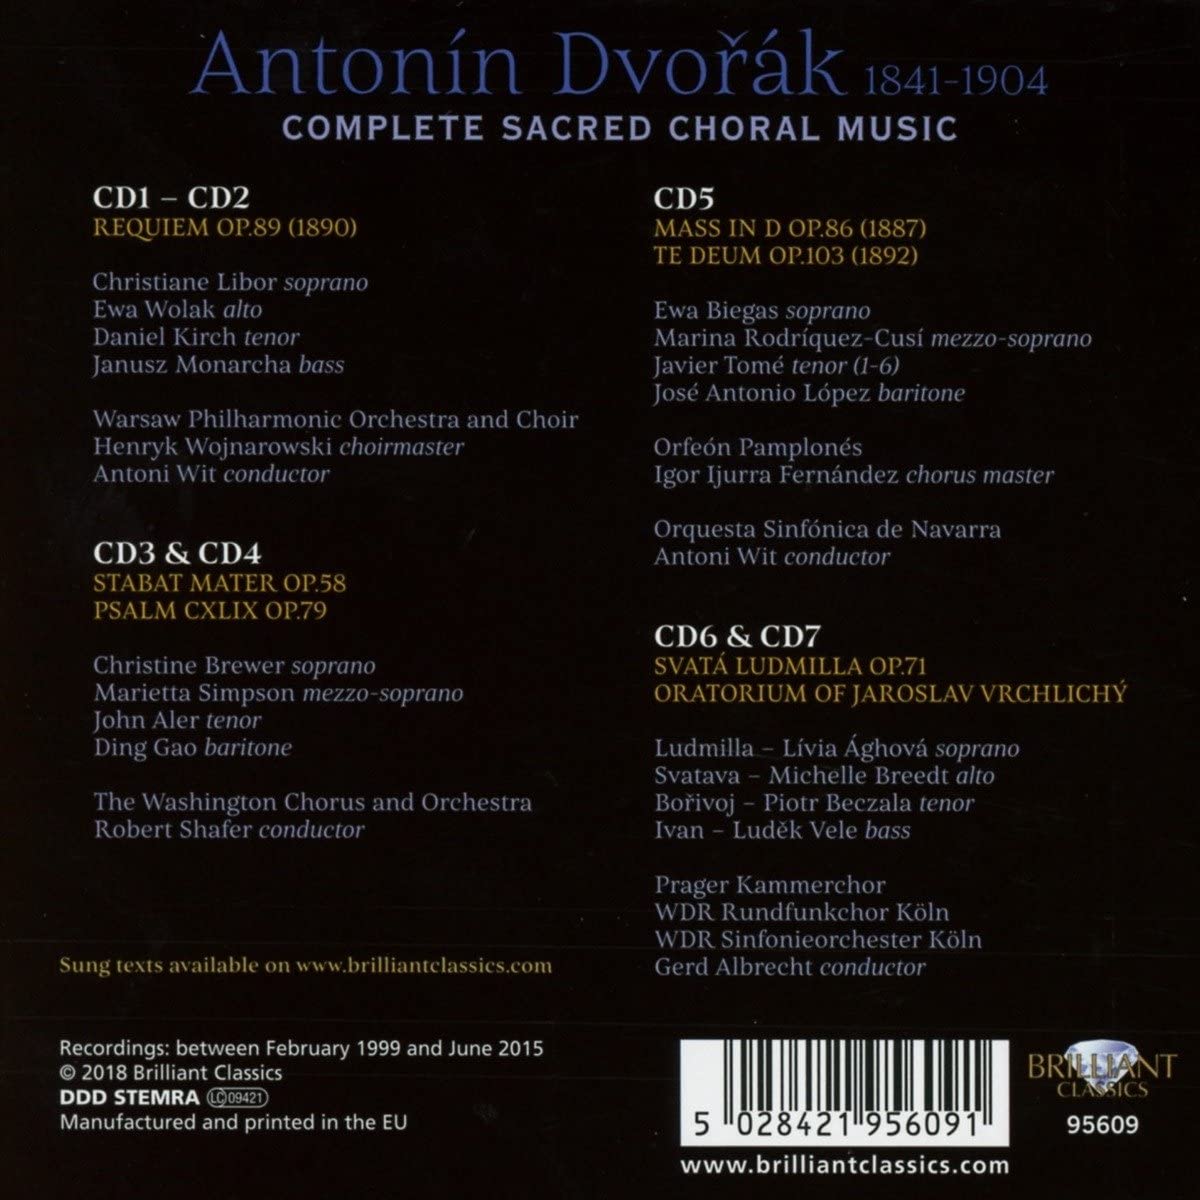 Dvorak: Complete Sacred Choral Music | Antonin Dvorak, Prager Kammerchor, Gerd Albrecht image1